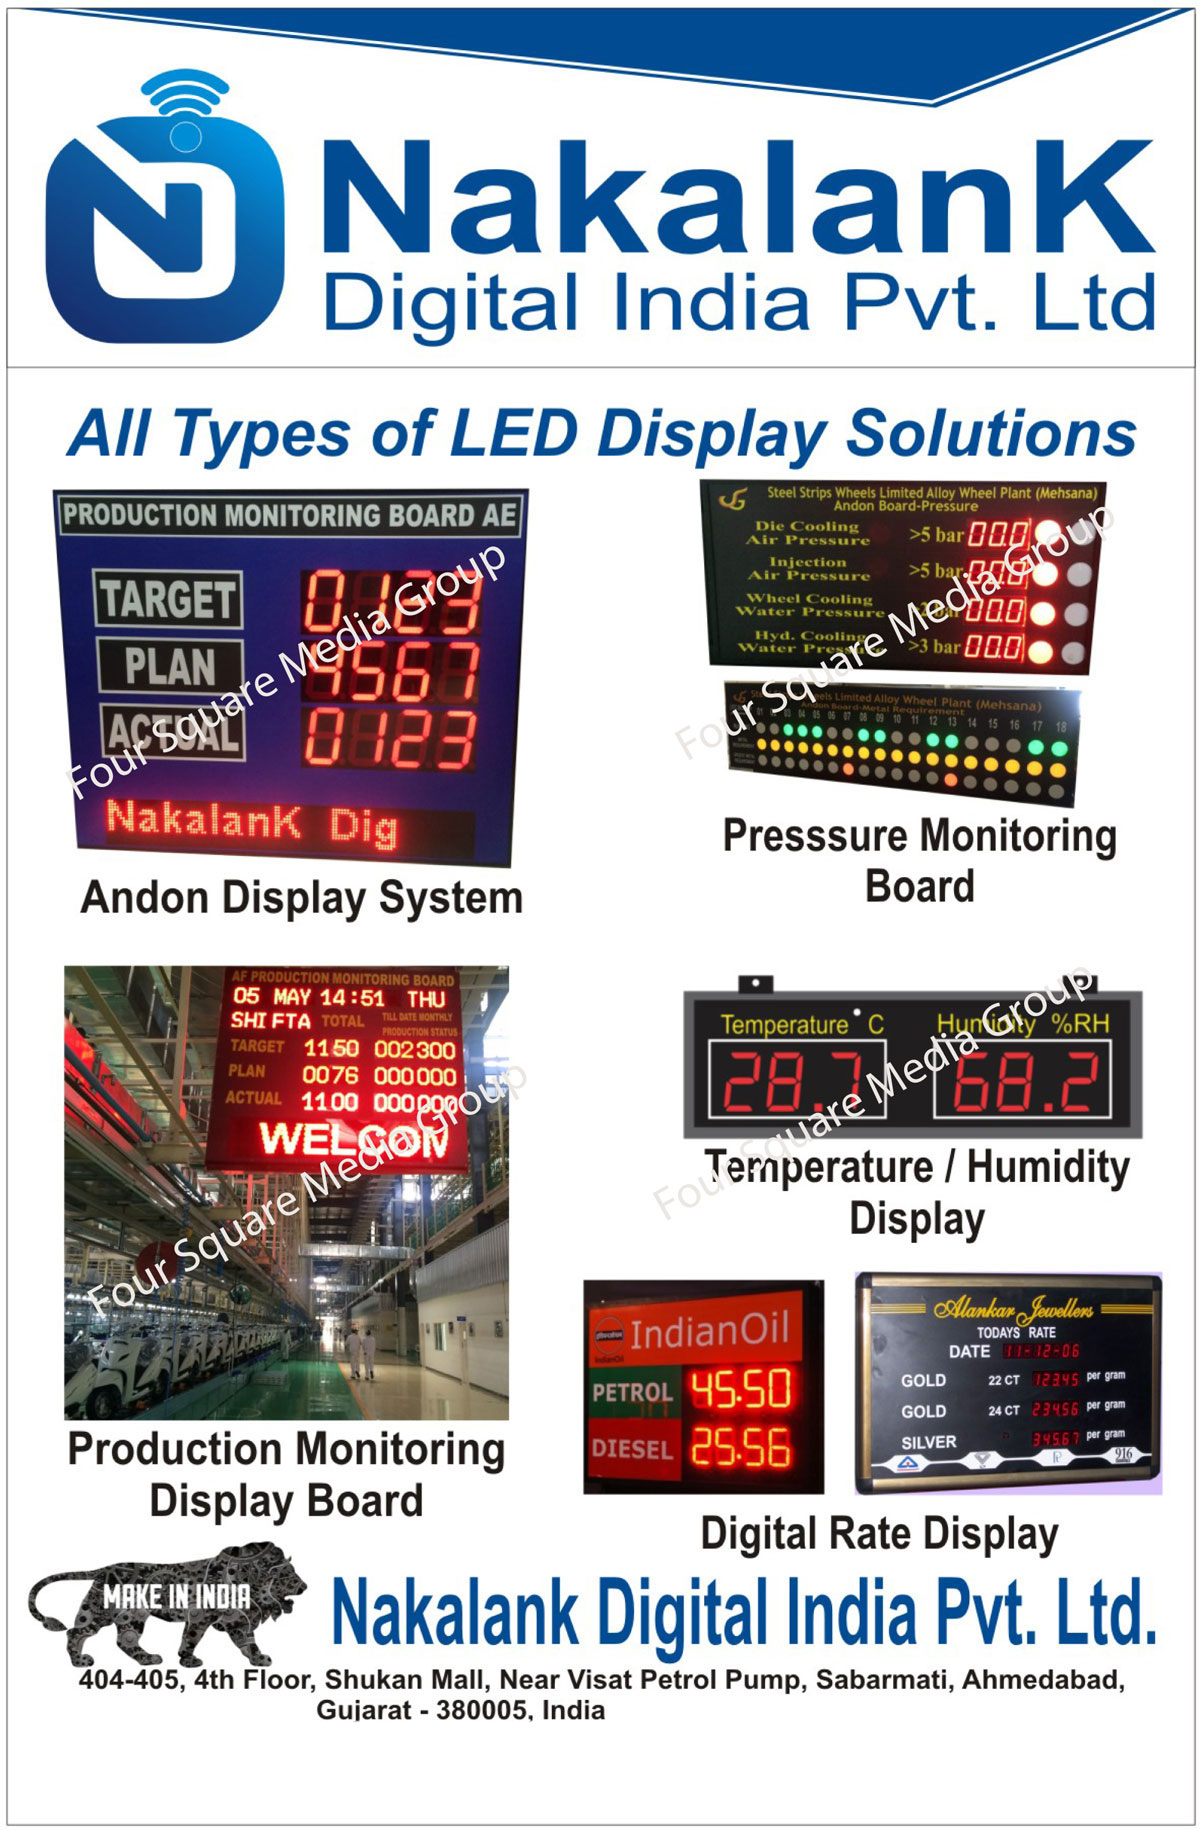 Led Display Boards, Andon Display Boards, Pressure Monitoring Systems, Production Monitoring Display Boards, Digital Rate Display Boards, Temperature Display Boards, Humidity Display Boards